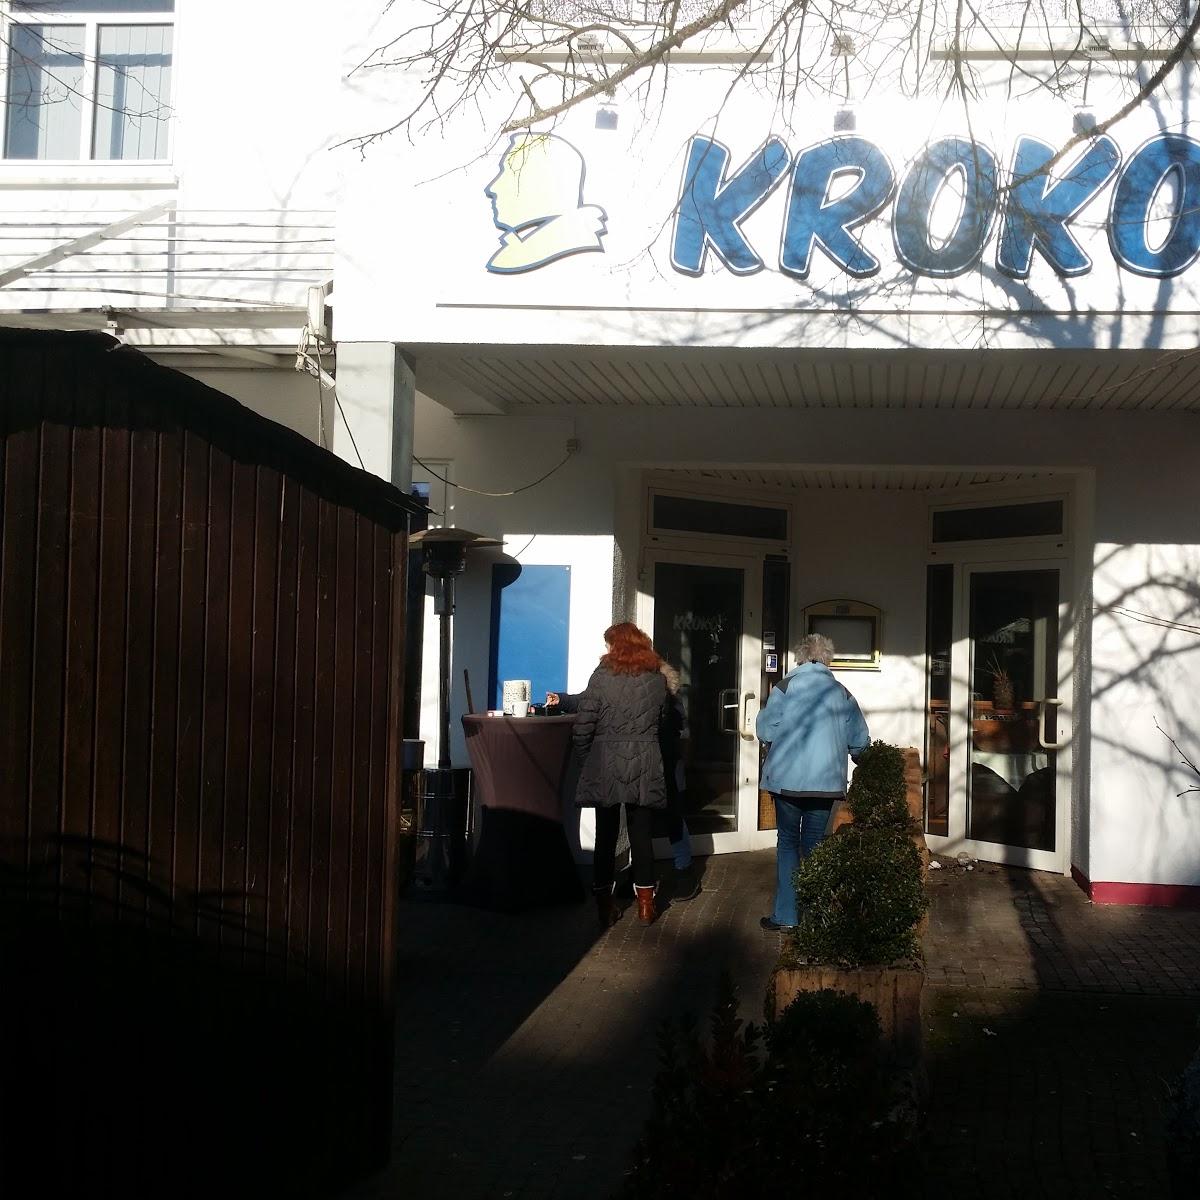 Restaurant "Bistro Kroko" in Bexbach